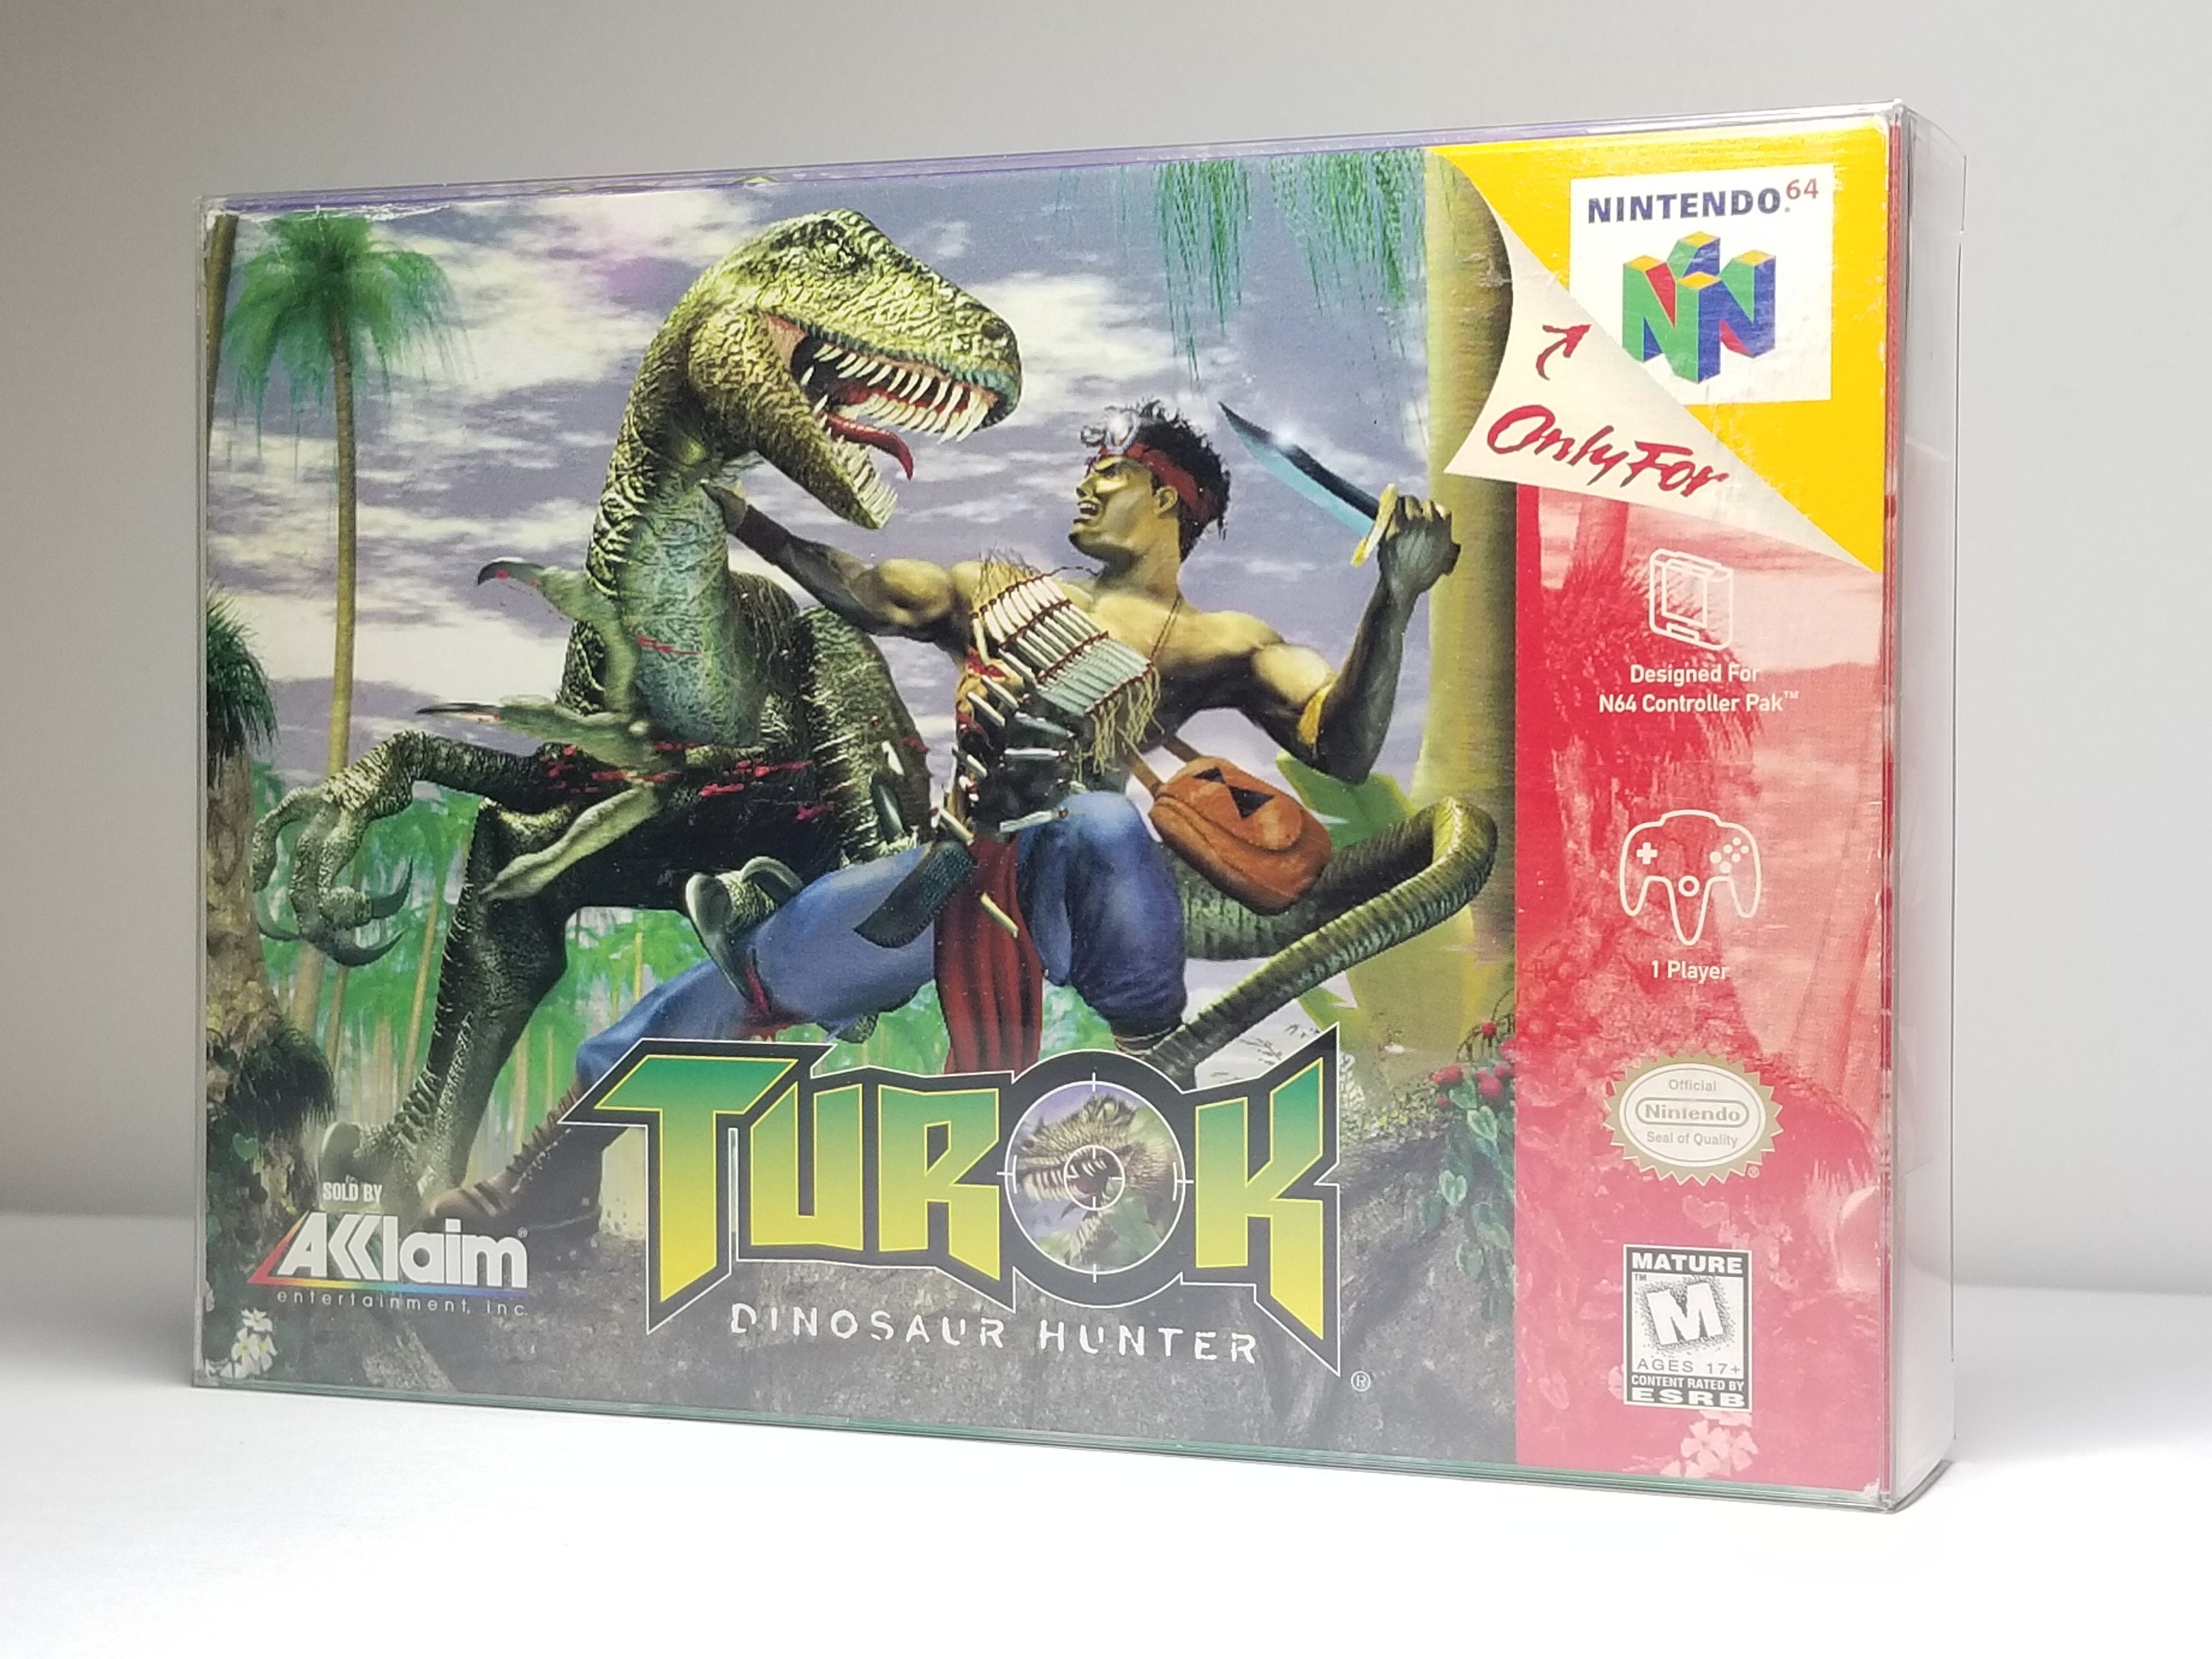 Turok & Turok 2: Seeds of Evil  PlayStation 4 - Limited Game News